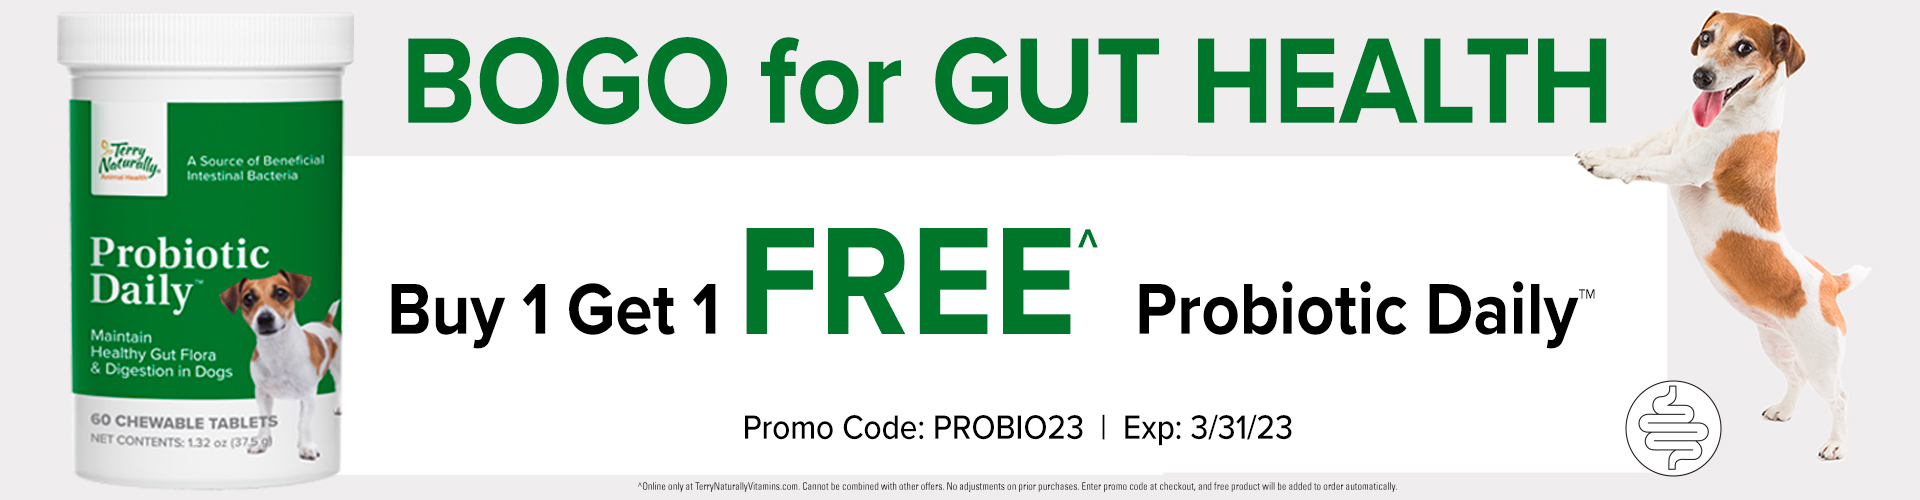 BOGO for Gut Health • Buy 1 Get 1 FREE Probiotic Daily